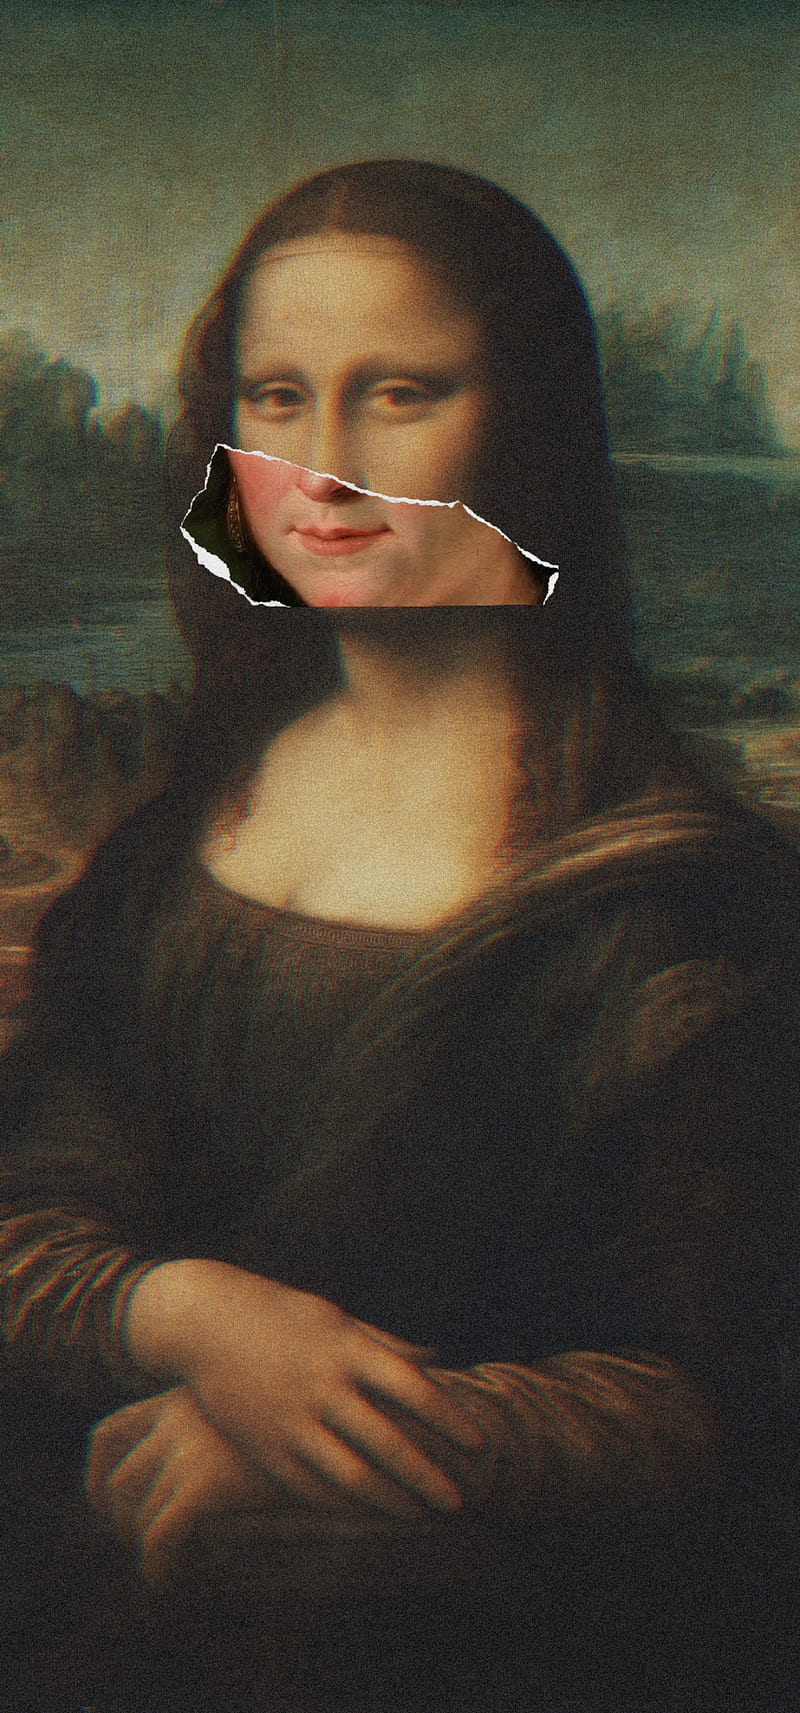 1920x1080px, 1080P free download | Mona Lisa art, mona lisa ...